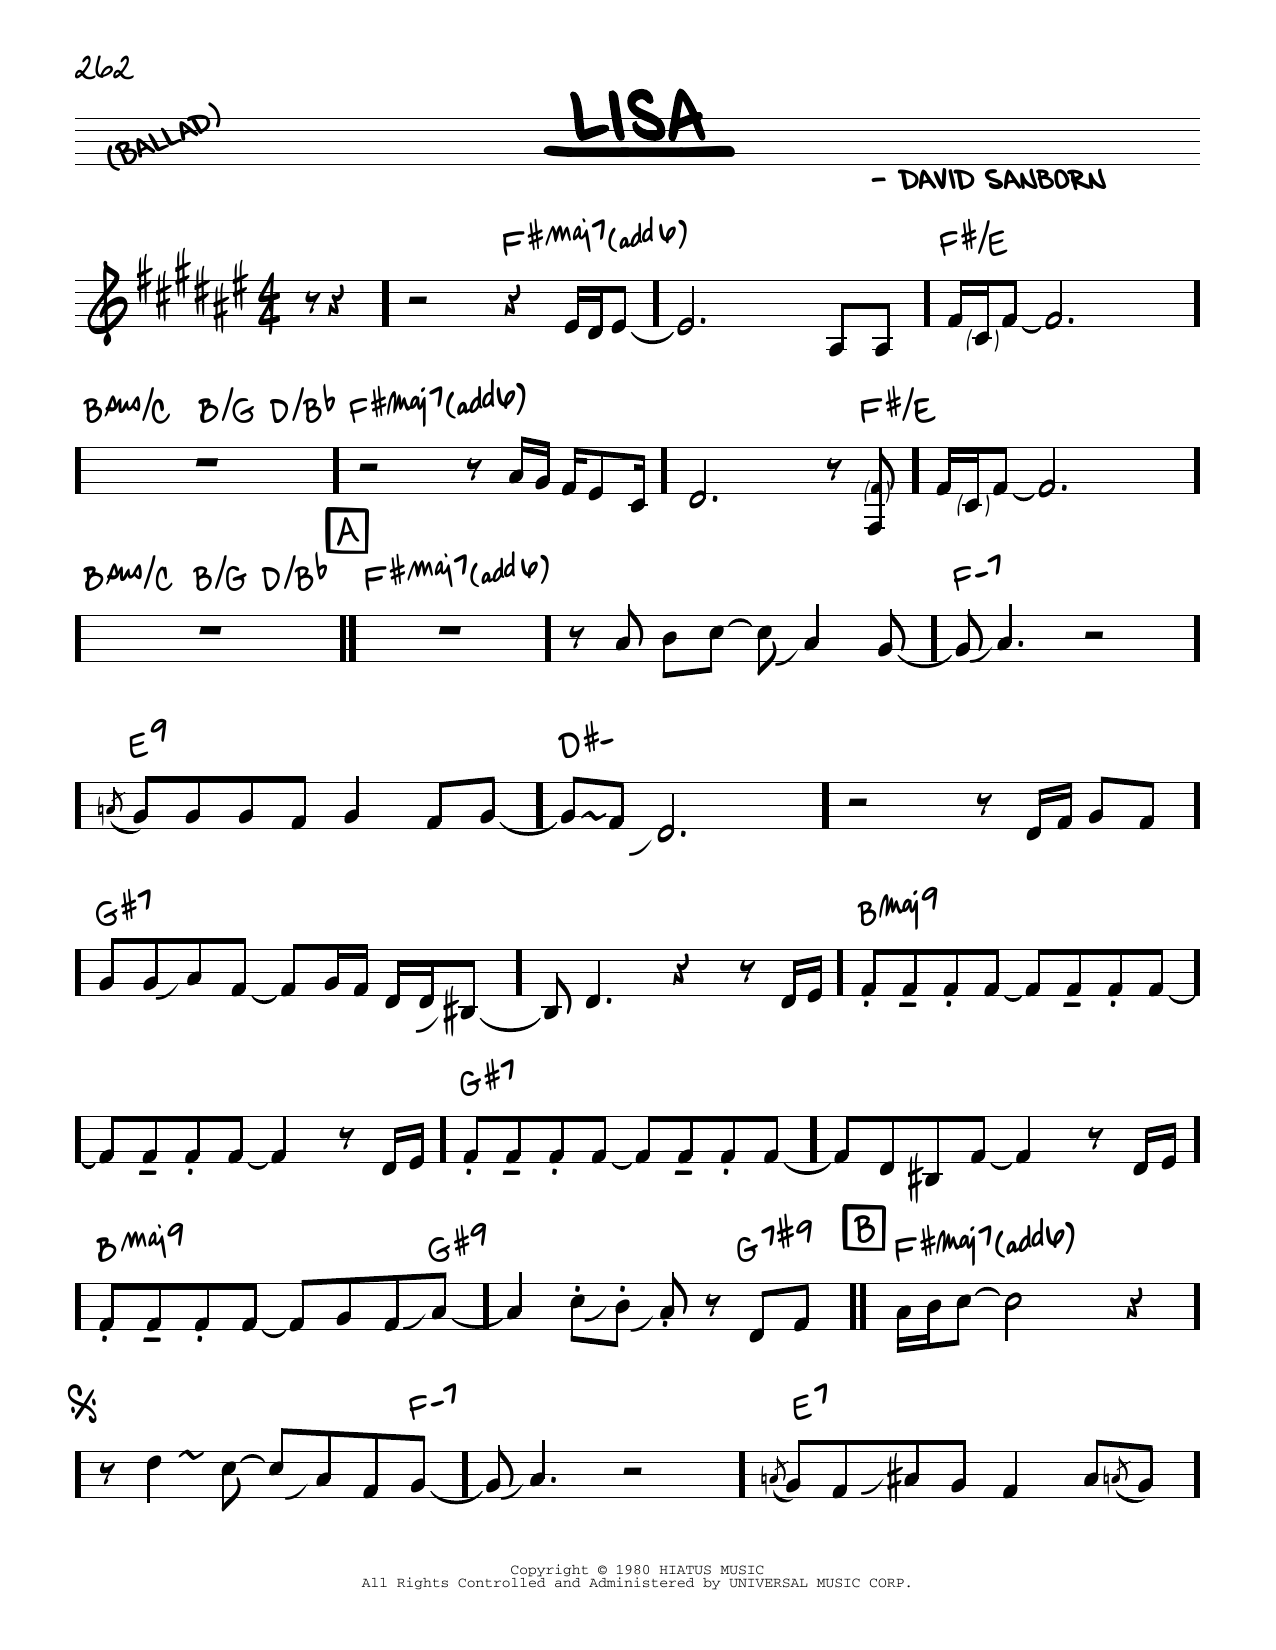 David Sanborn Lisa Sheet Music Notes & Chords for Real Book – Melody & Chords - Download or Print PDF